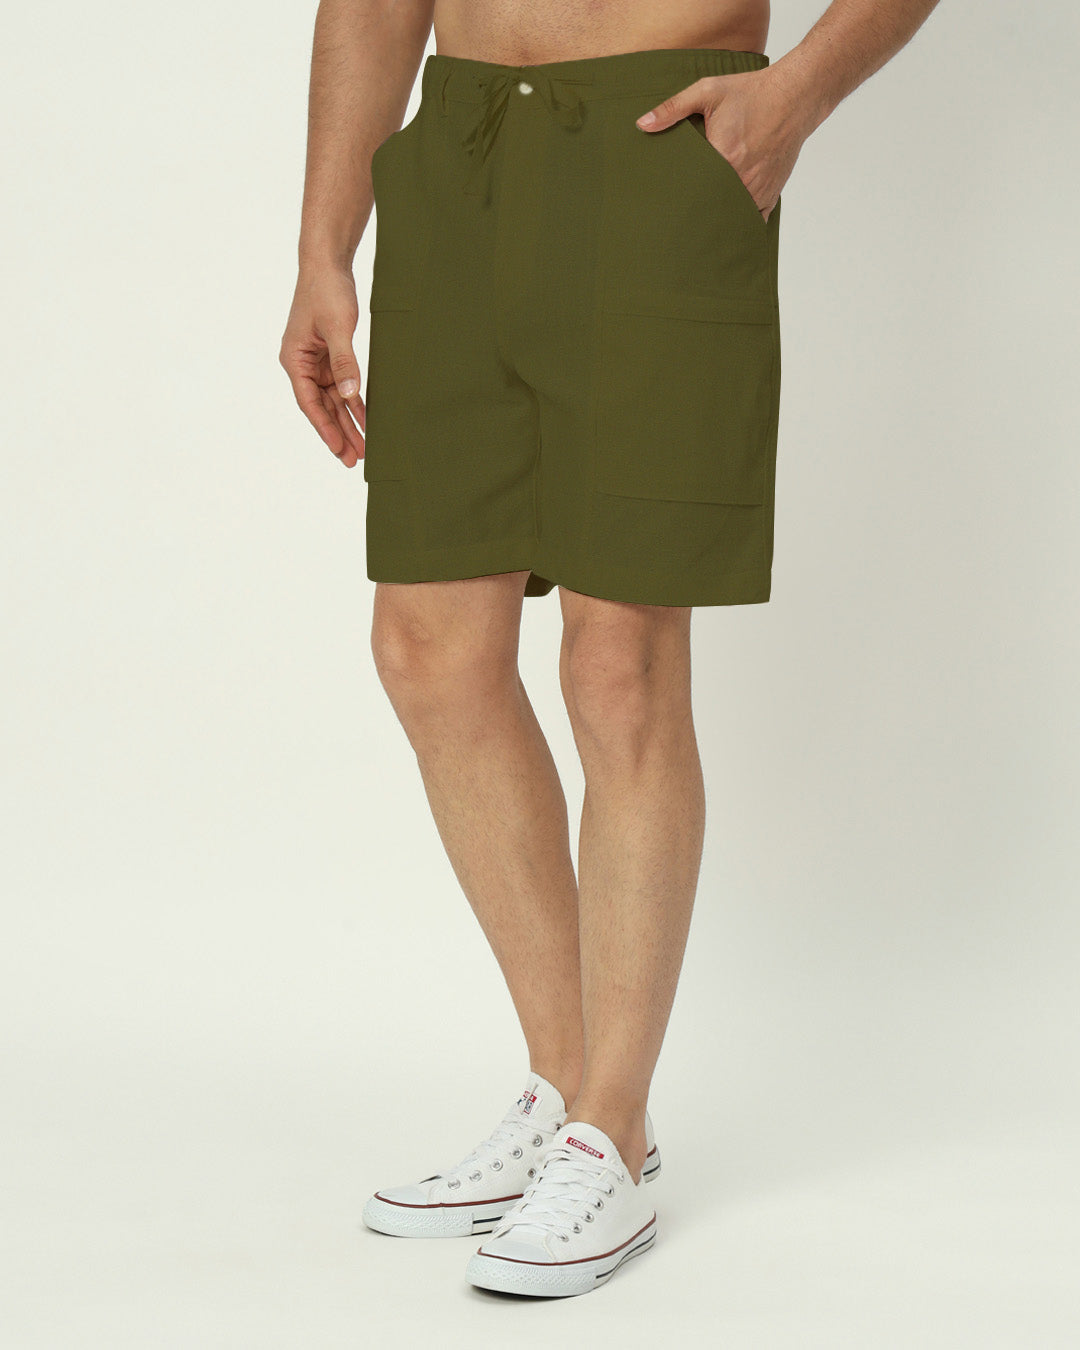 Comfortable City Dweller Olive Green Men's Shorts